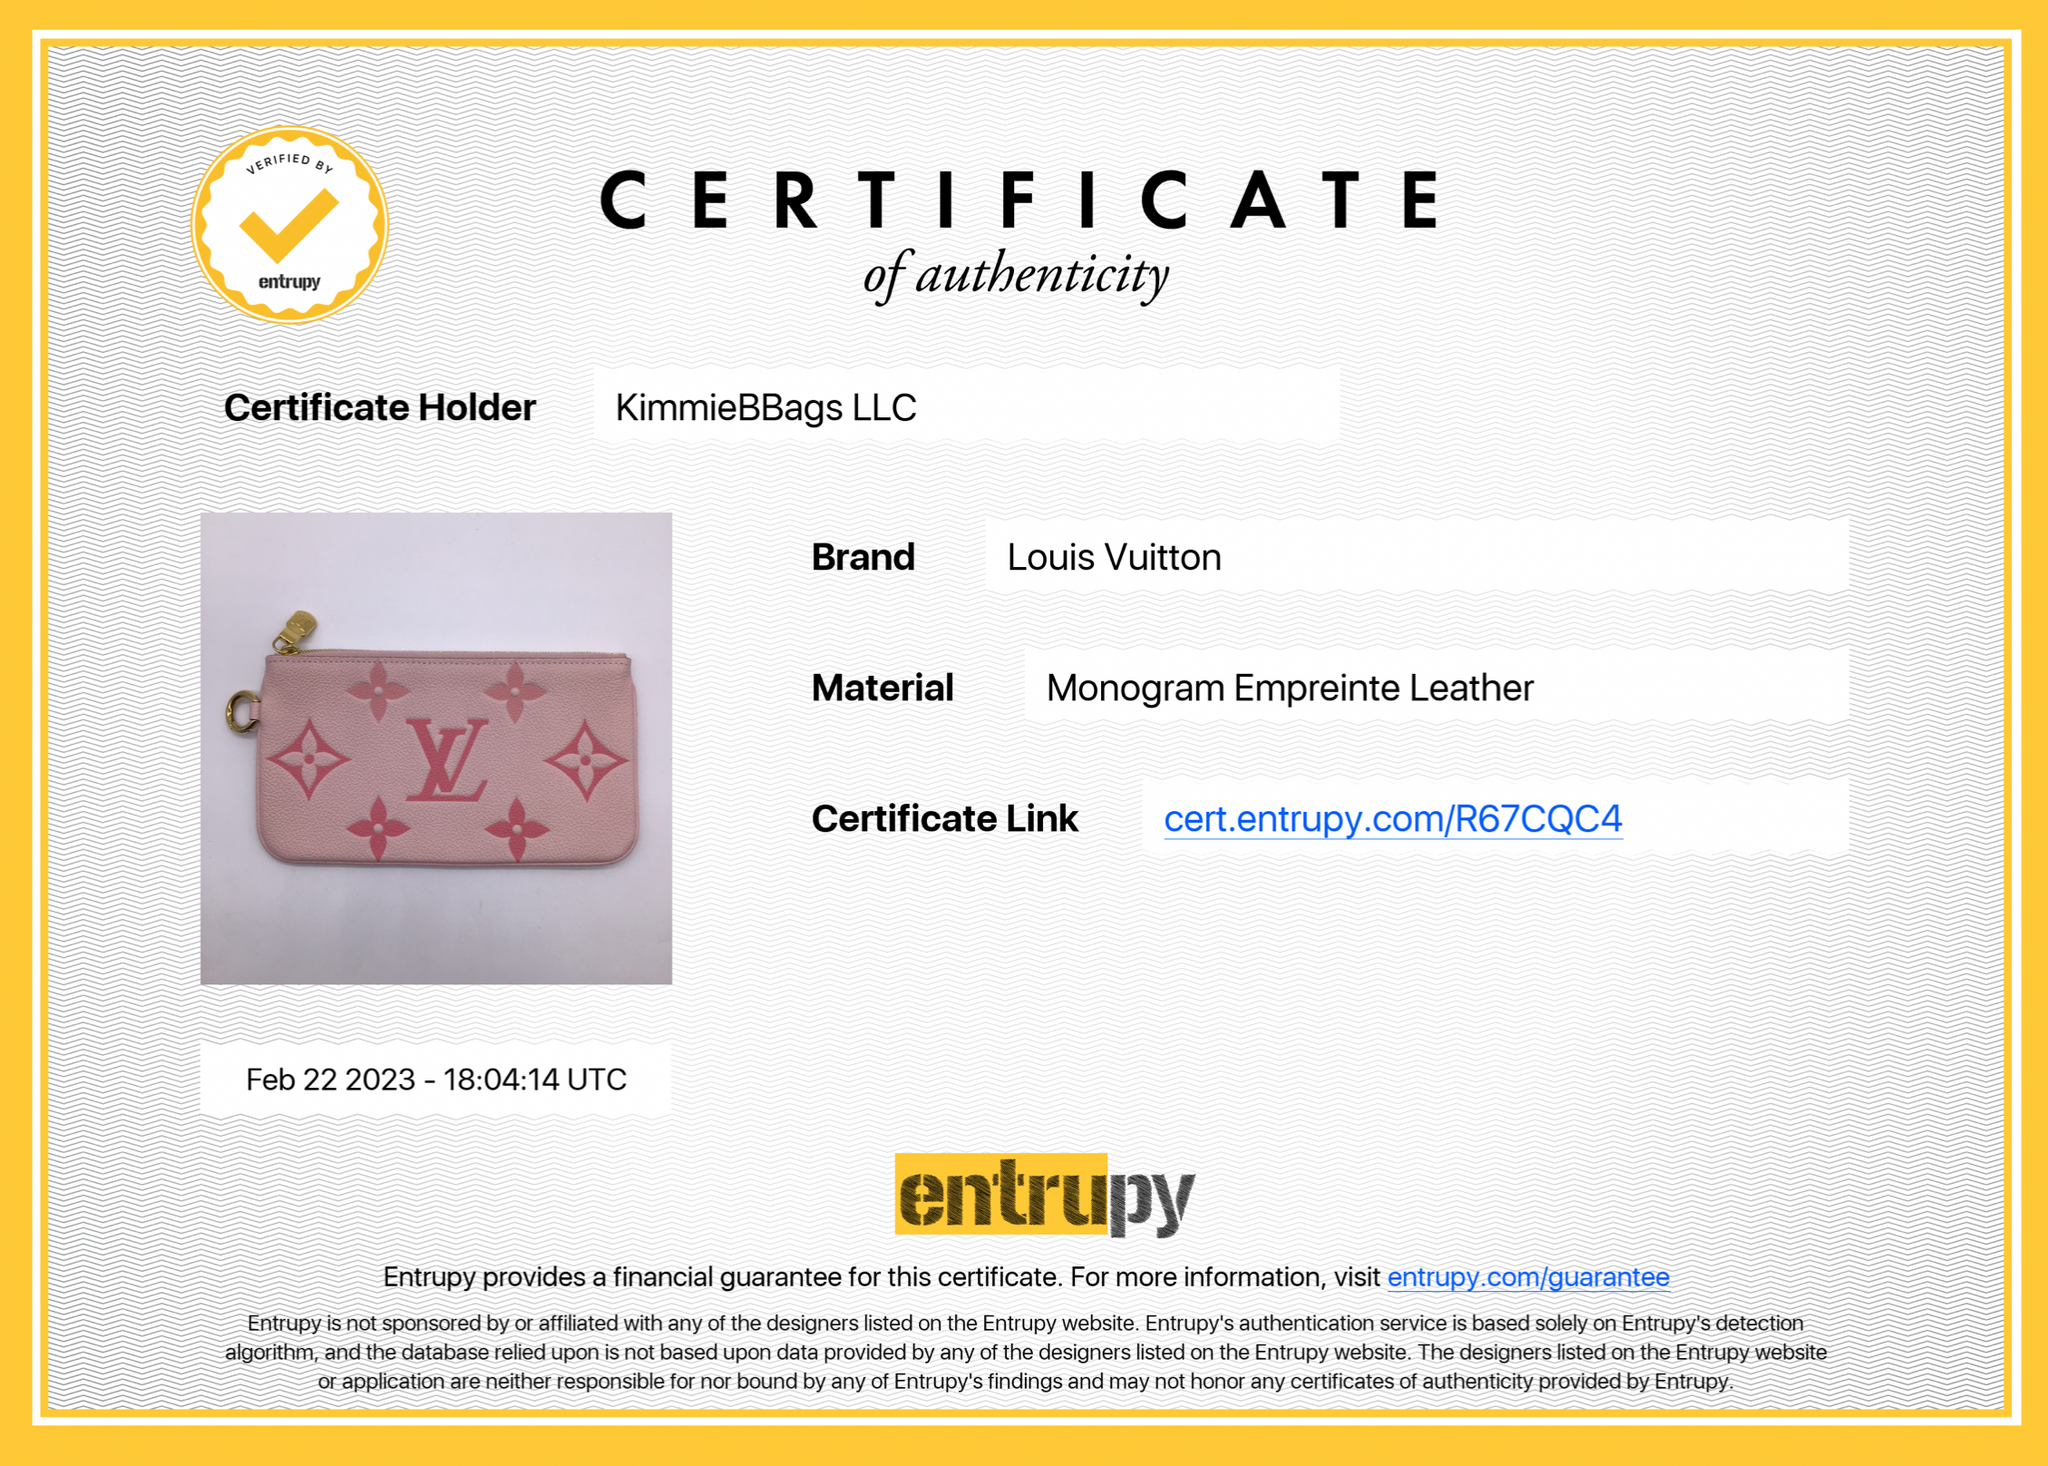 Louis Vuitton, Bags, Brand New Louis Vuitton Trio Pouch Set